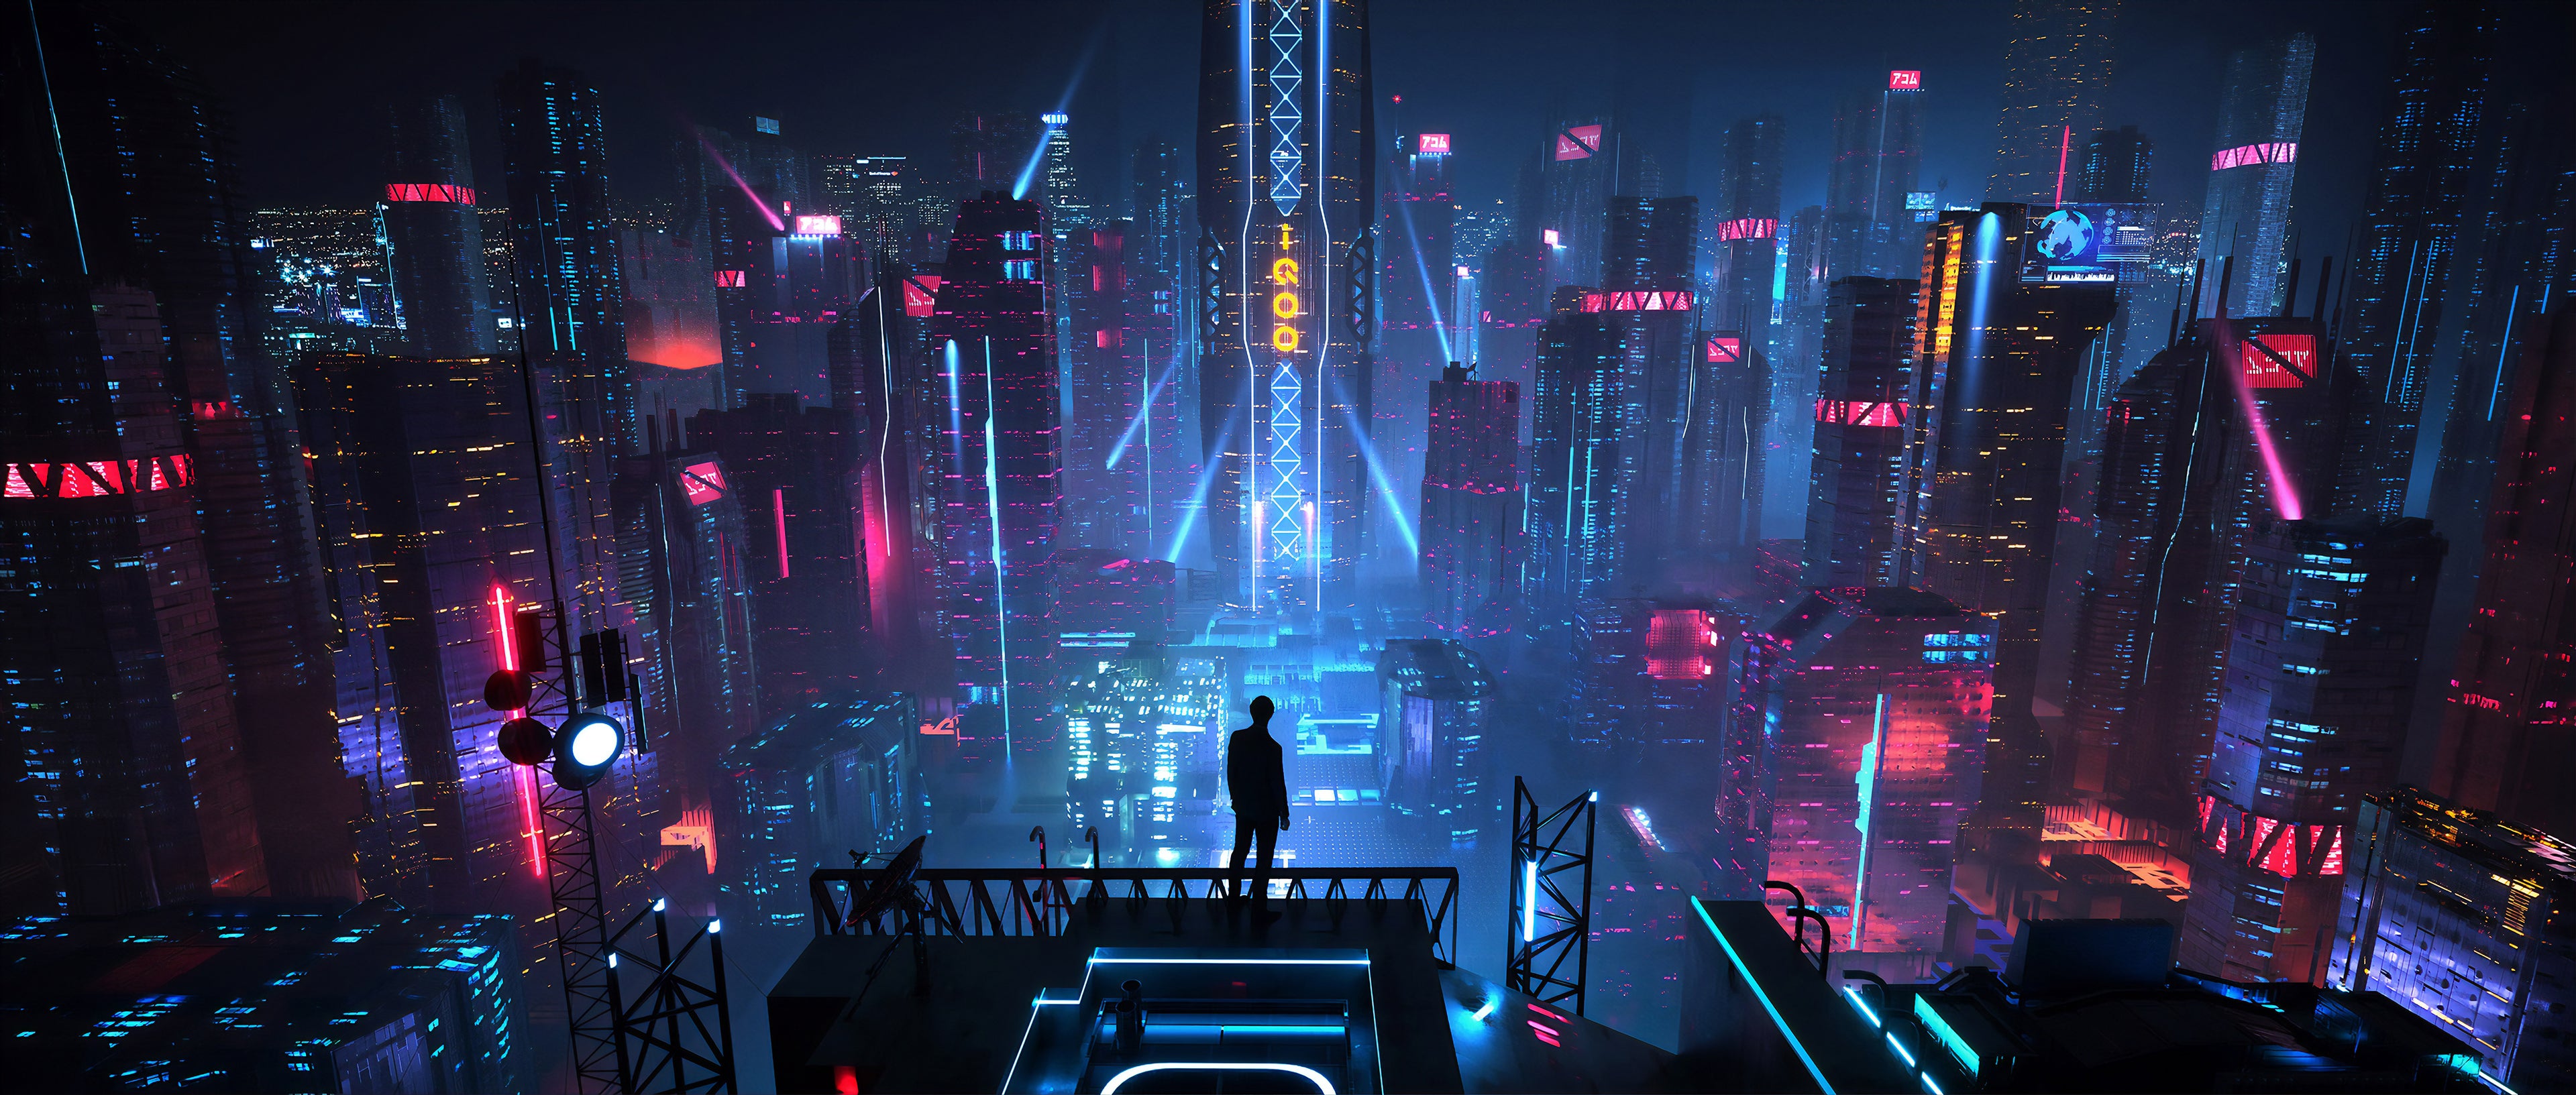 Cyberpunk City Wallpaper - Sci Fi City Night - HD Wallpaper 